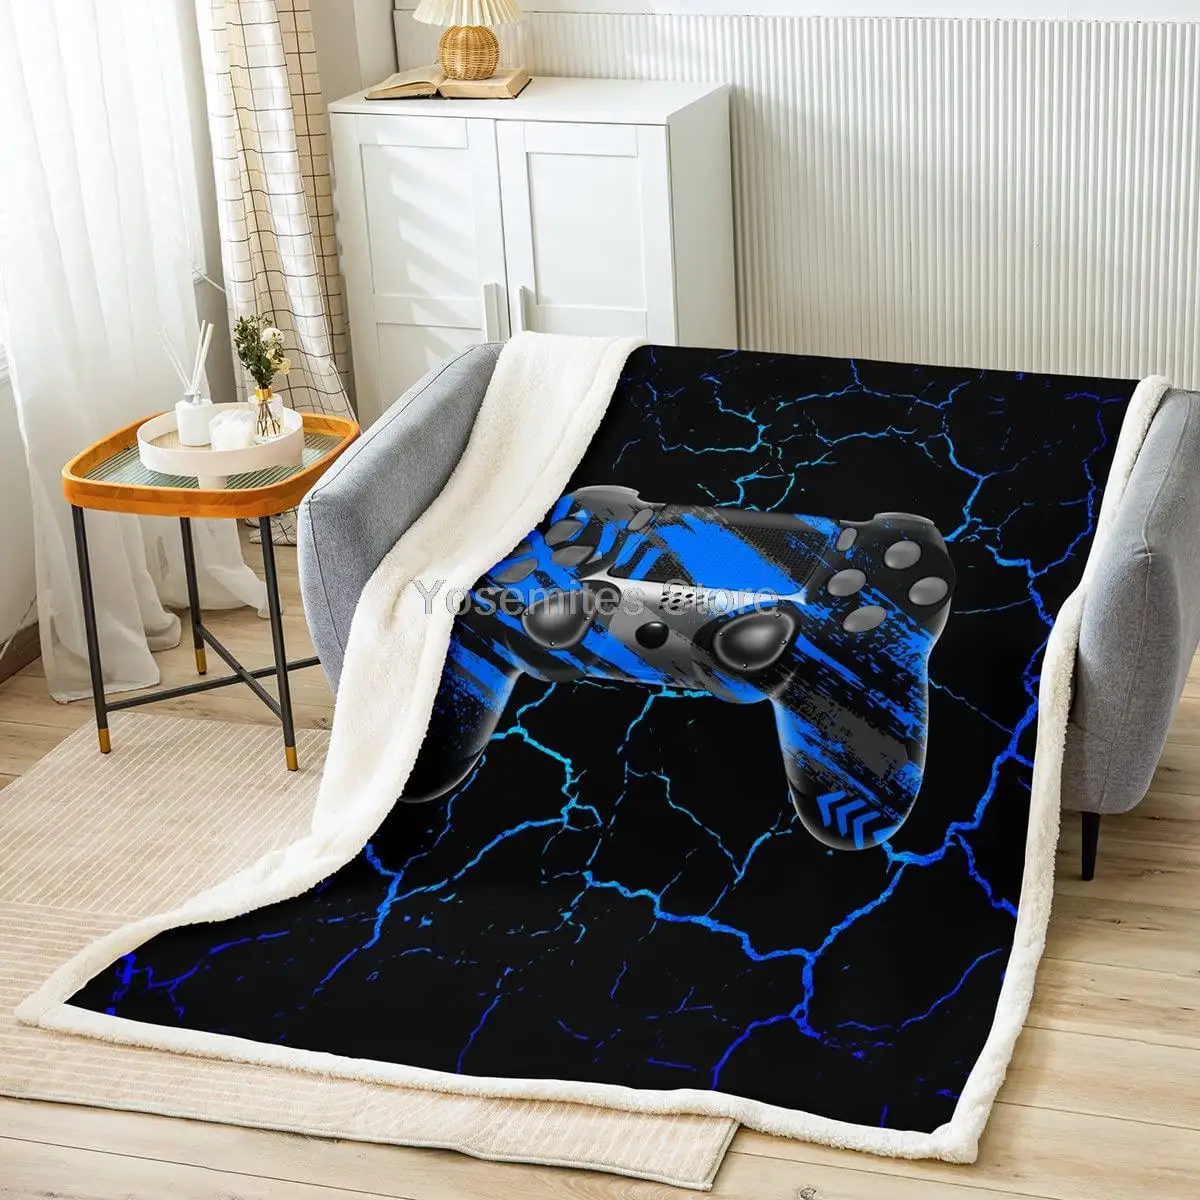 

Castle Fairy Gaming Gamer Flannel Blanket,Blue Lightning Gamepad Fuzzy Blanket for Children Xmas Present,Video Games Theme Soft